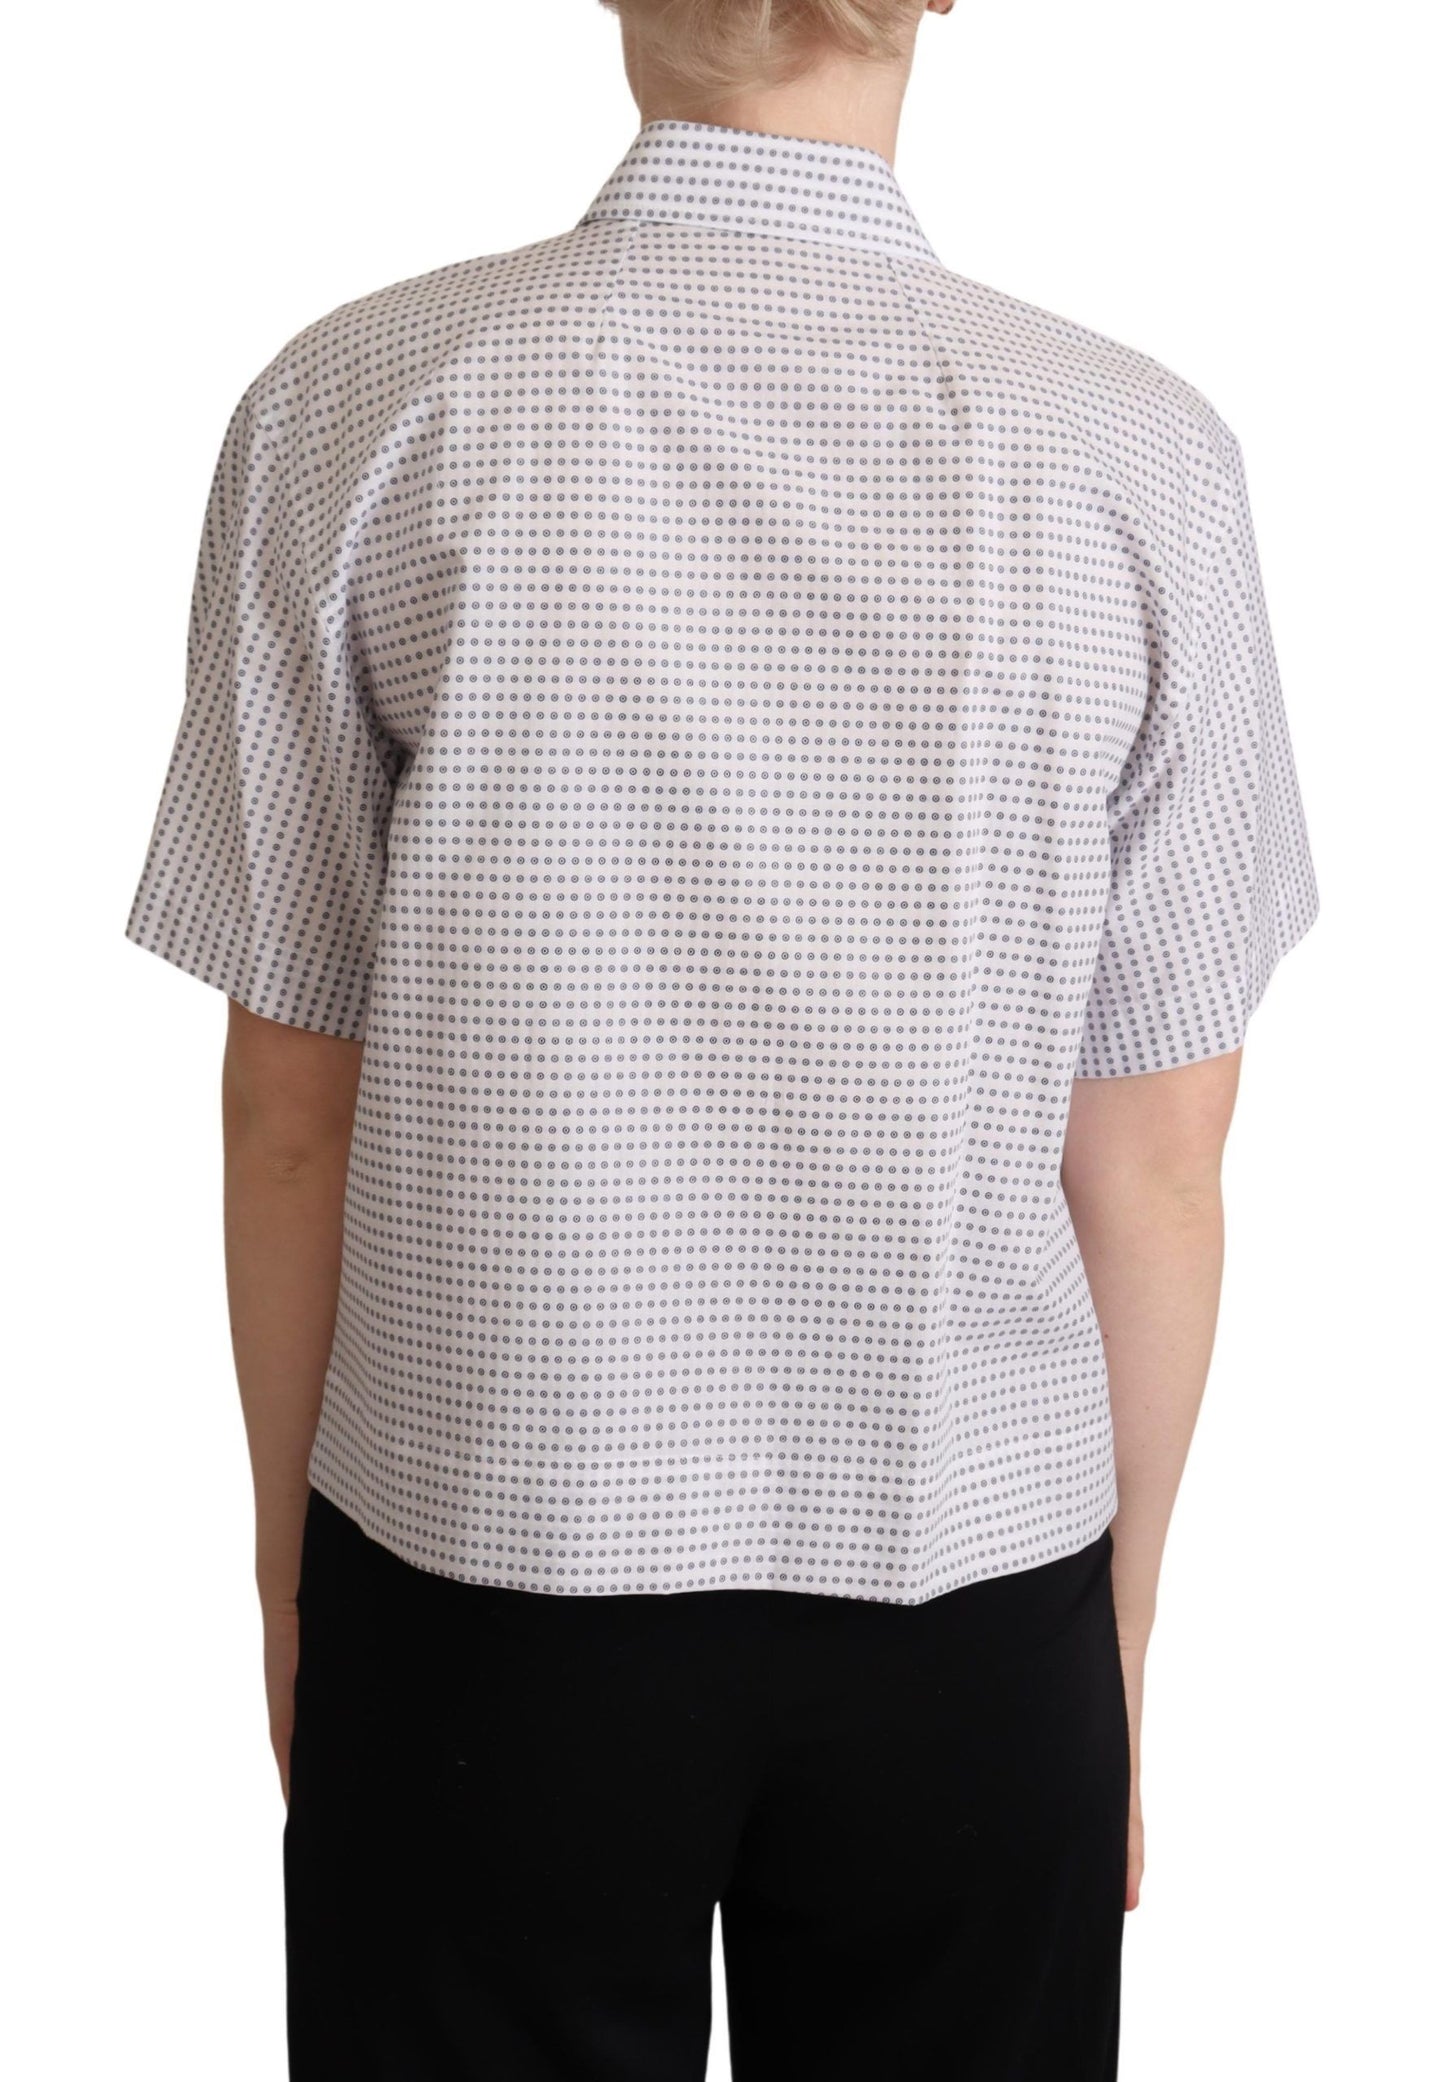 White Polka Dots Collared Blouse Shirt